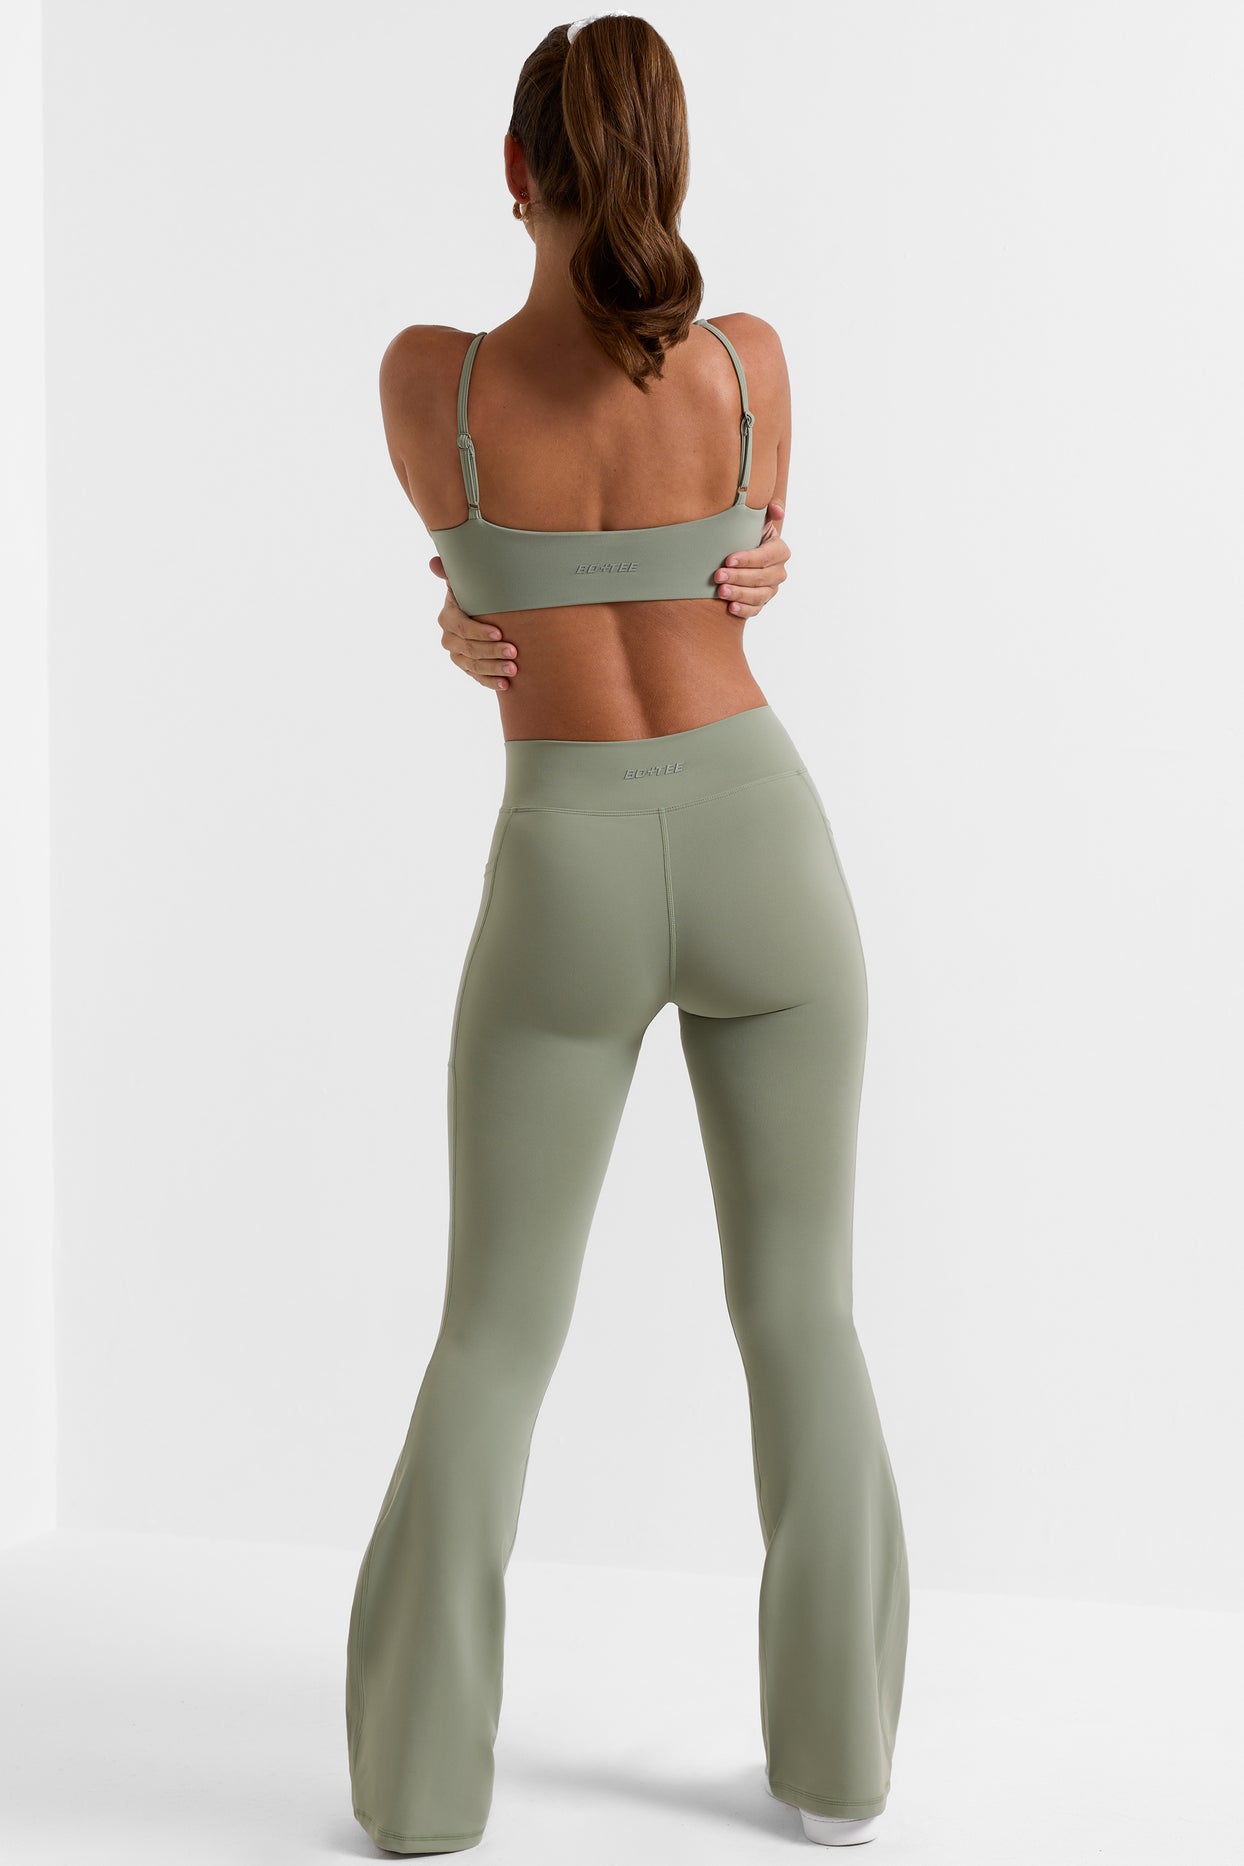 V WAIST FLARED YOGA PANTS WITH POCKETS - Olive / L  Flared yoga pants, Yoga  pants with pockets, Flare leggings